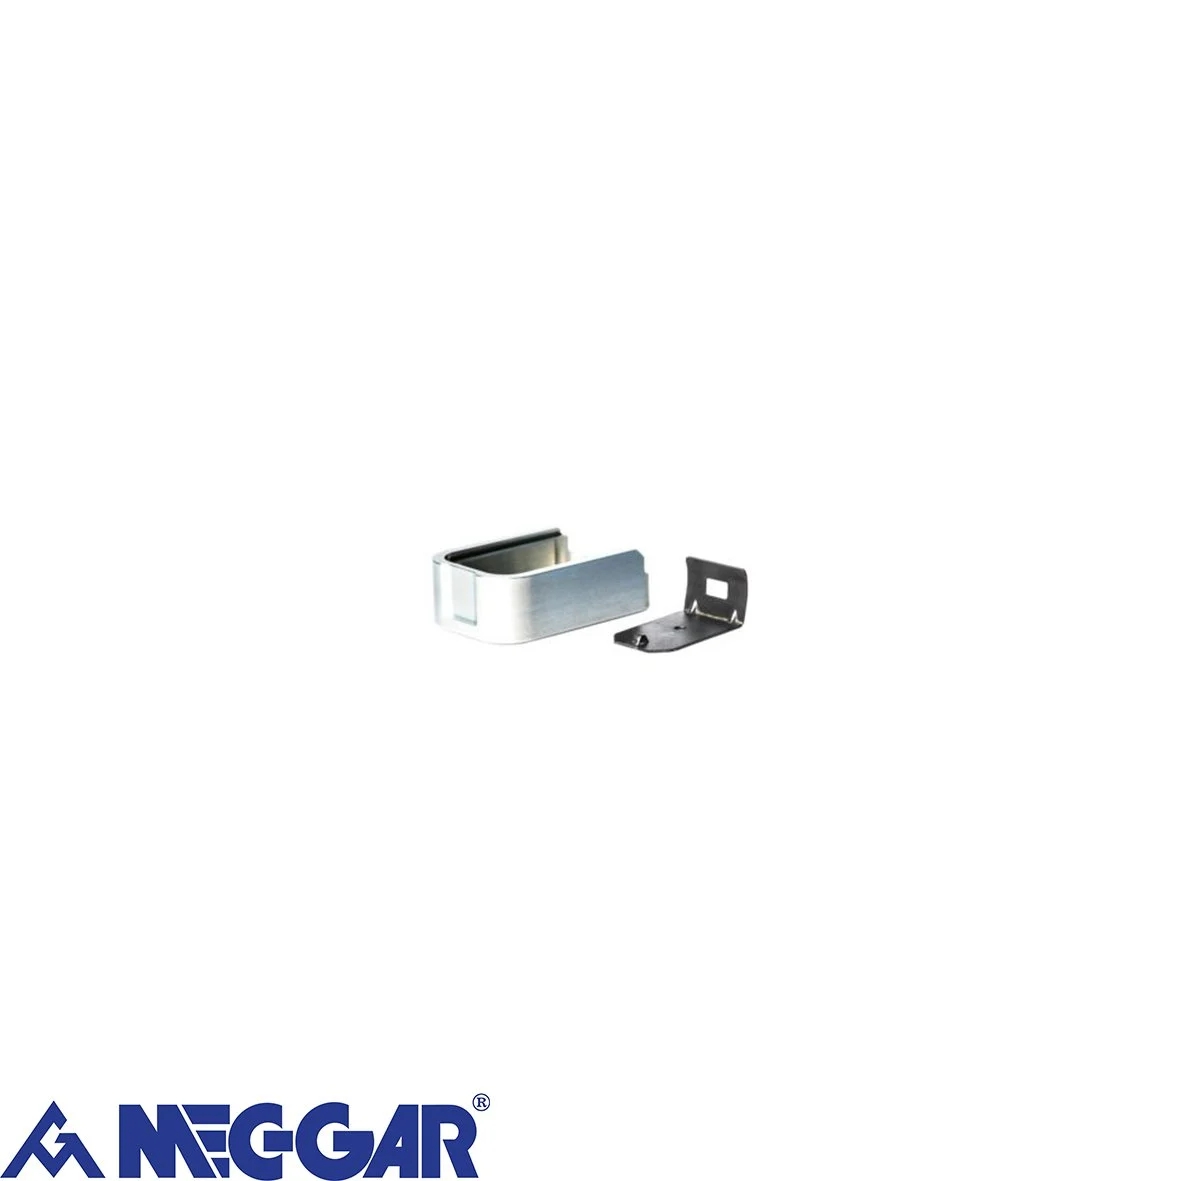 MEC-GAR Plus 2 Gri Alüminyum Set